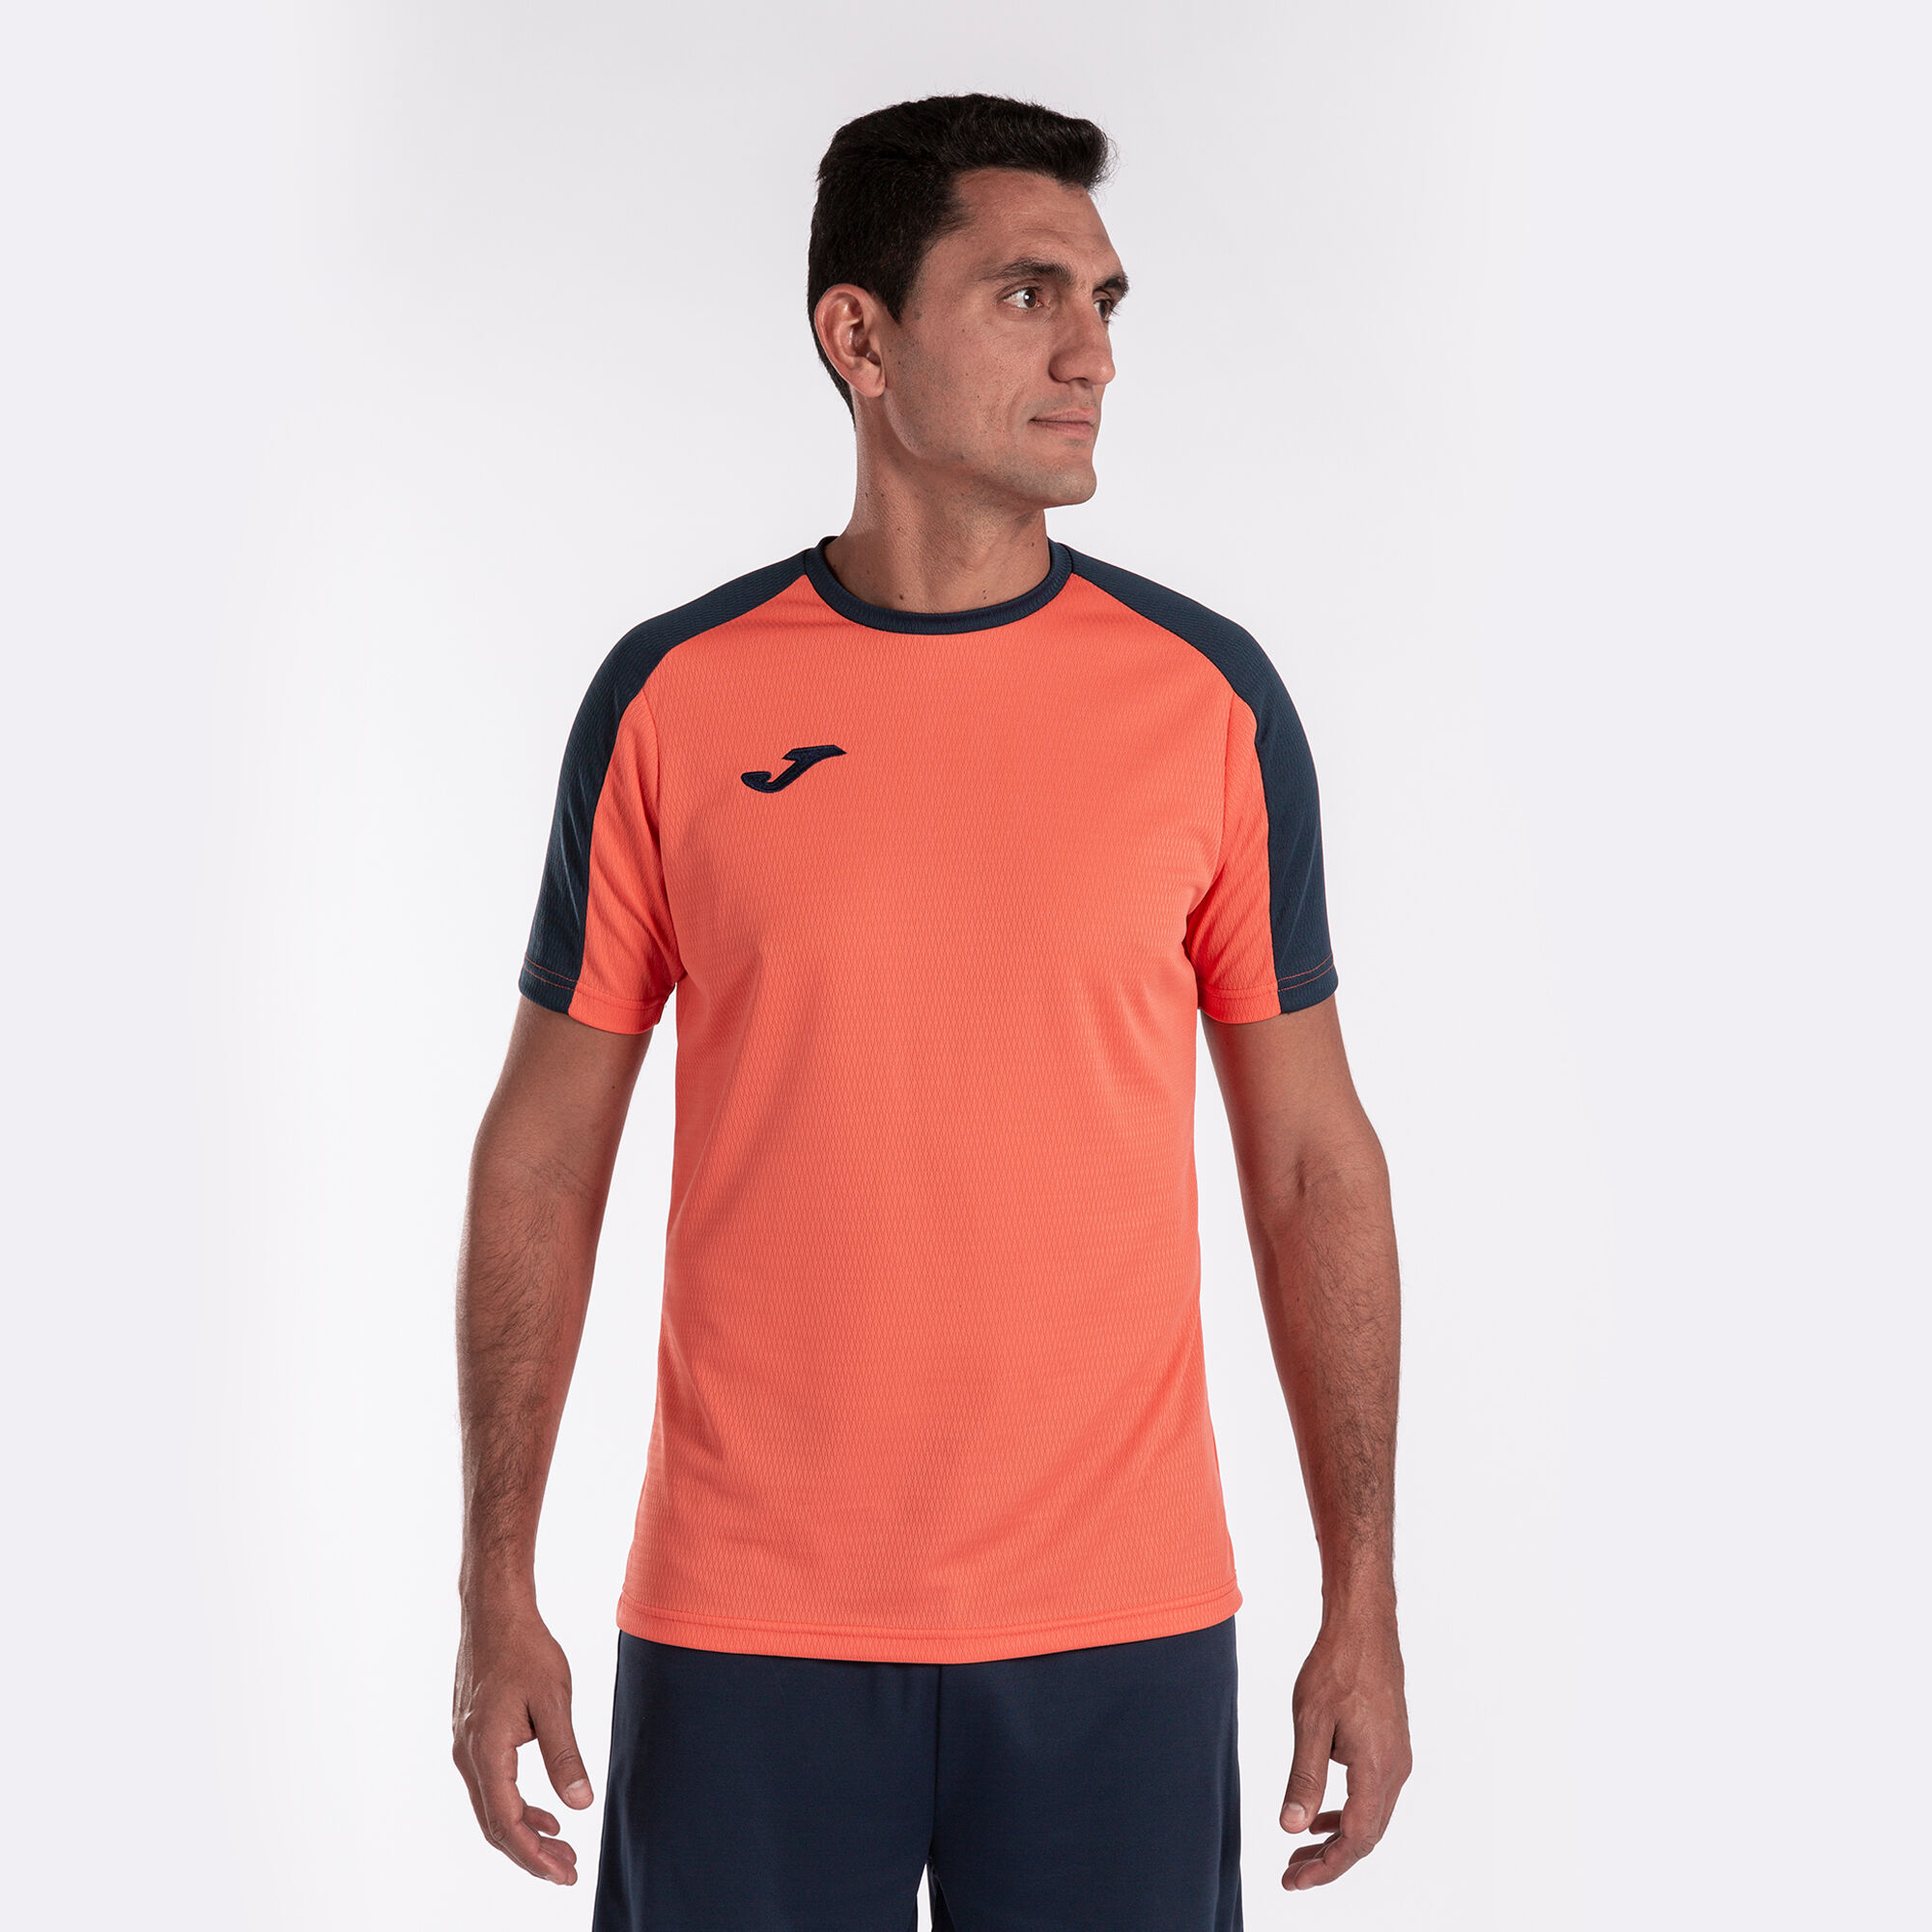 T-shirt manga curta homem Eco Championship laranja fluorescente azul marinho